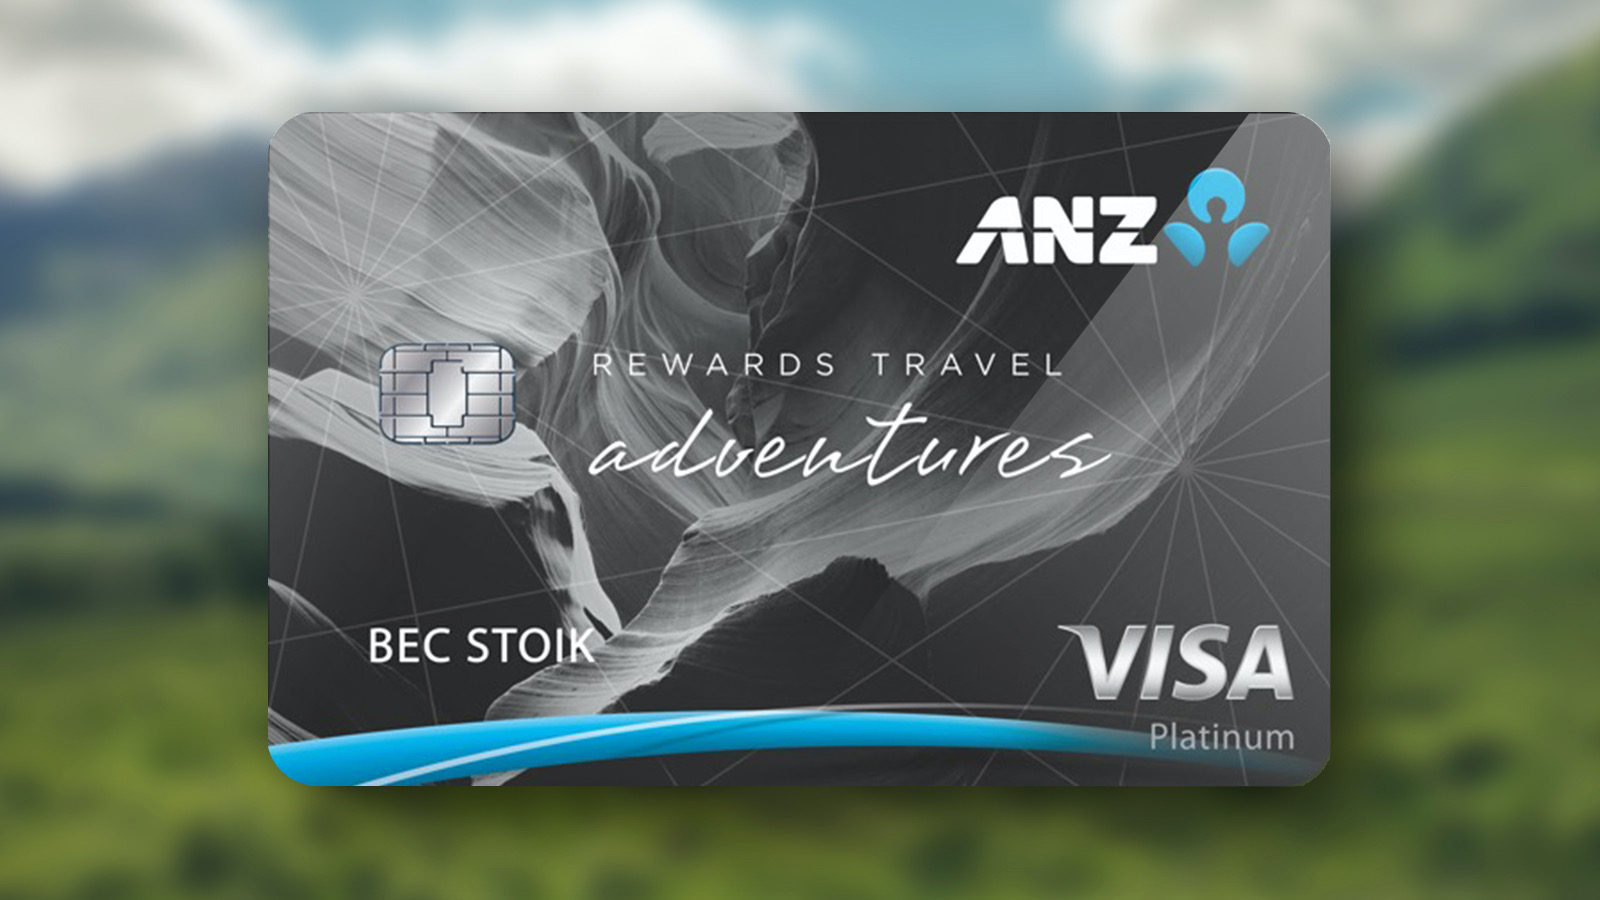 anz travel card application